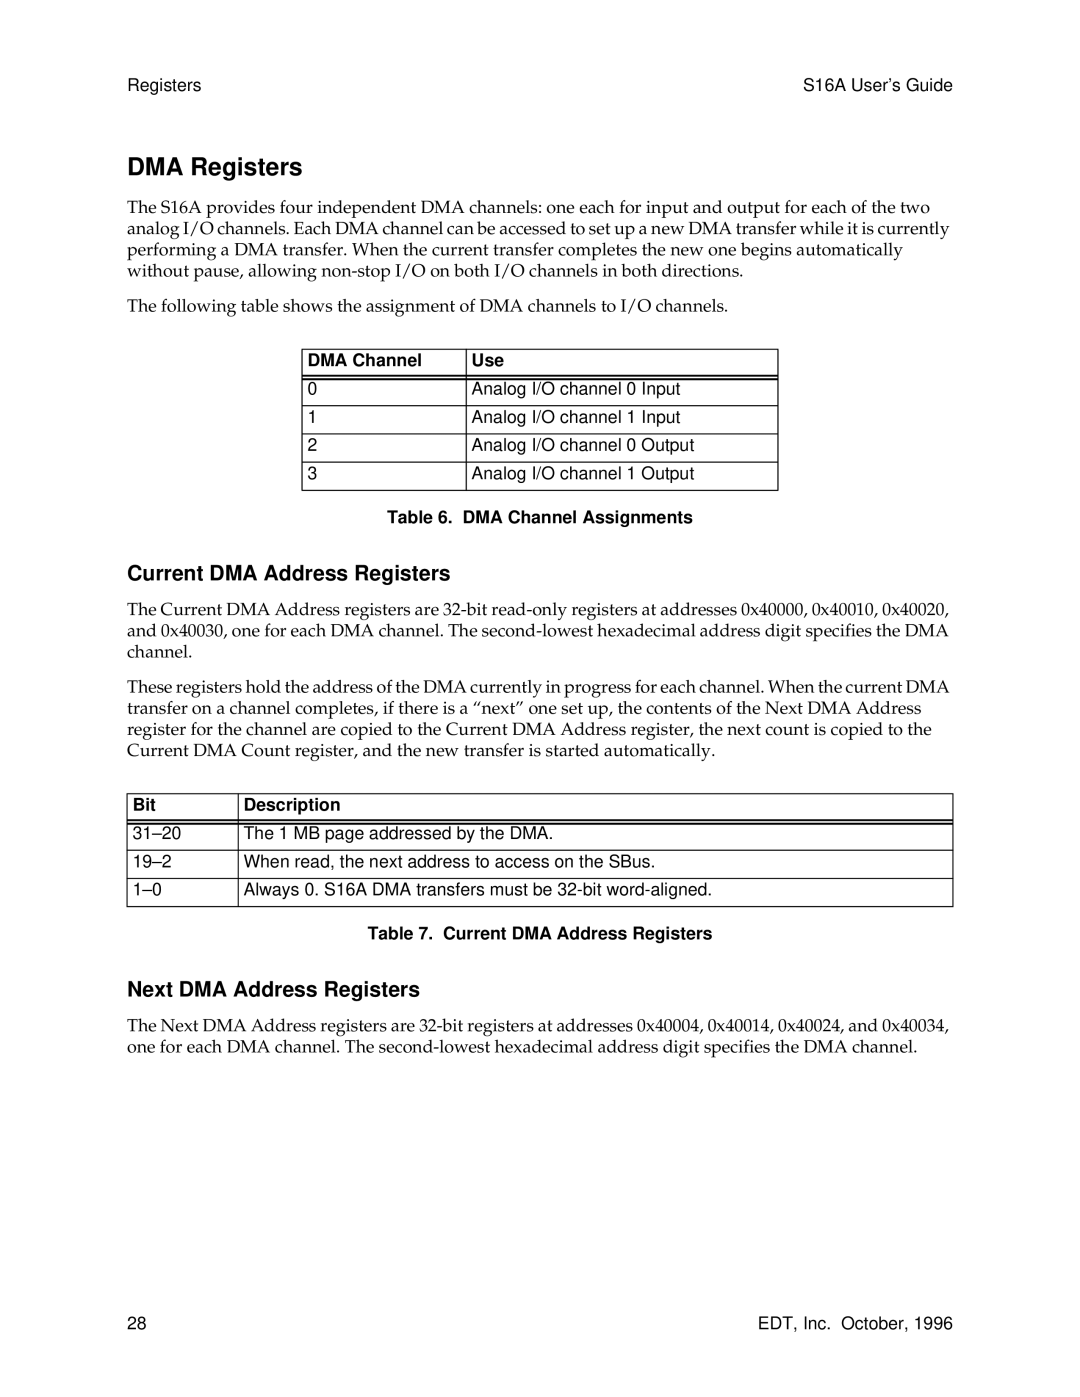 Sun Microsystems S16A DMA Registers, Current DMA Address Registers, Next DMA Address Registers, DMA Channel, Description 